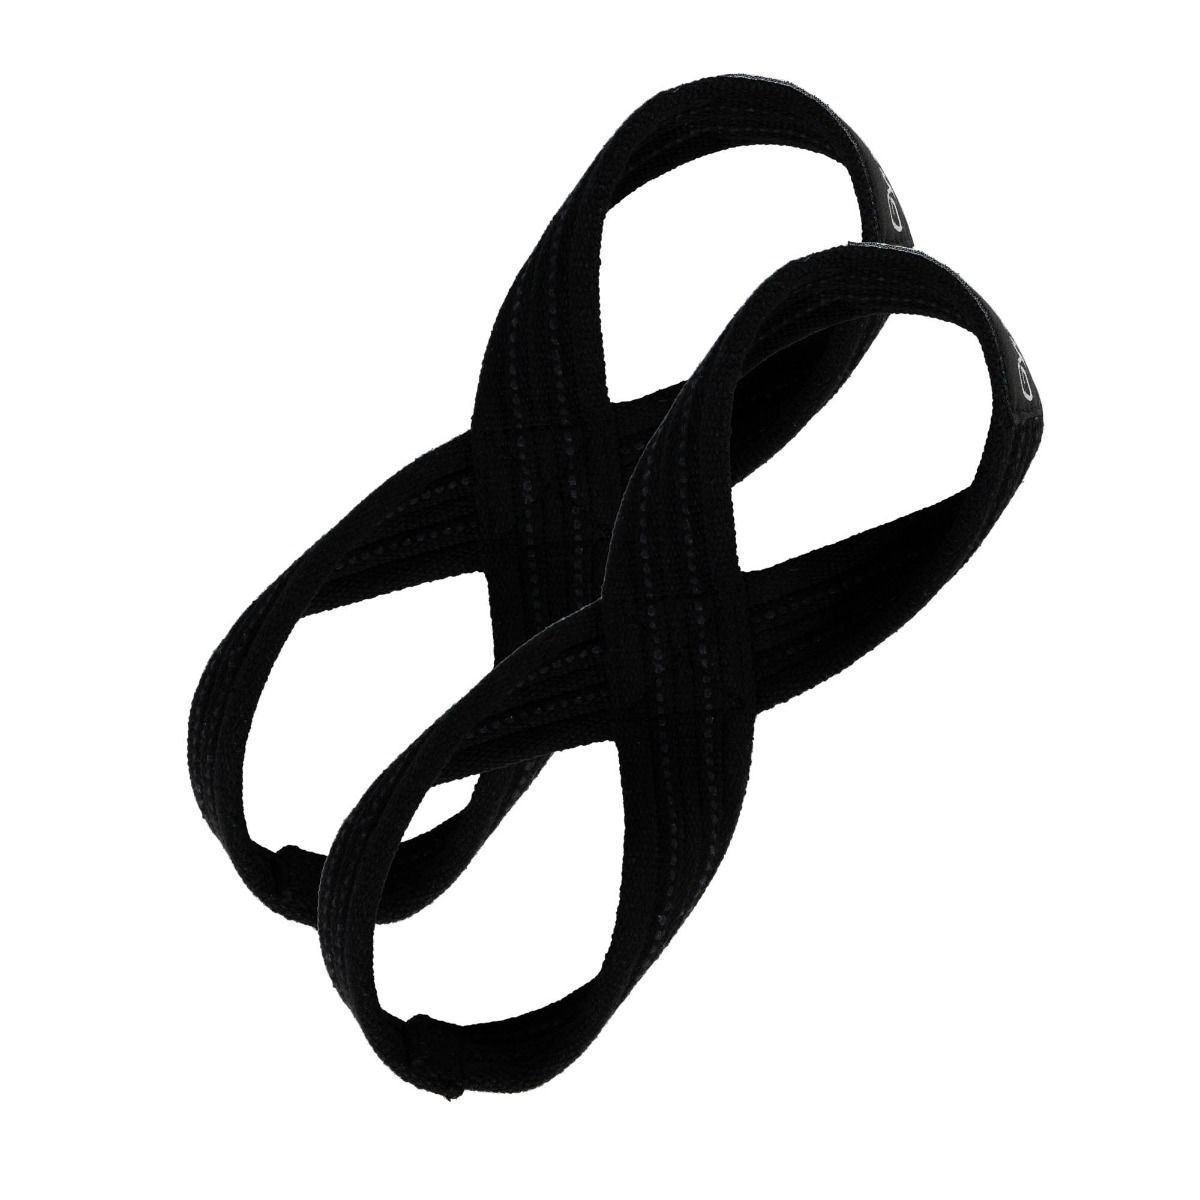 MYPRO Figure of 8 Lifting Straps - Black